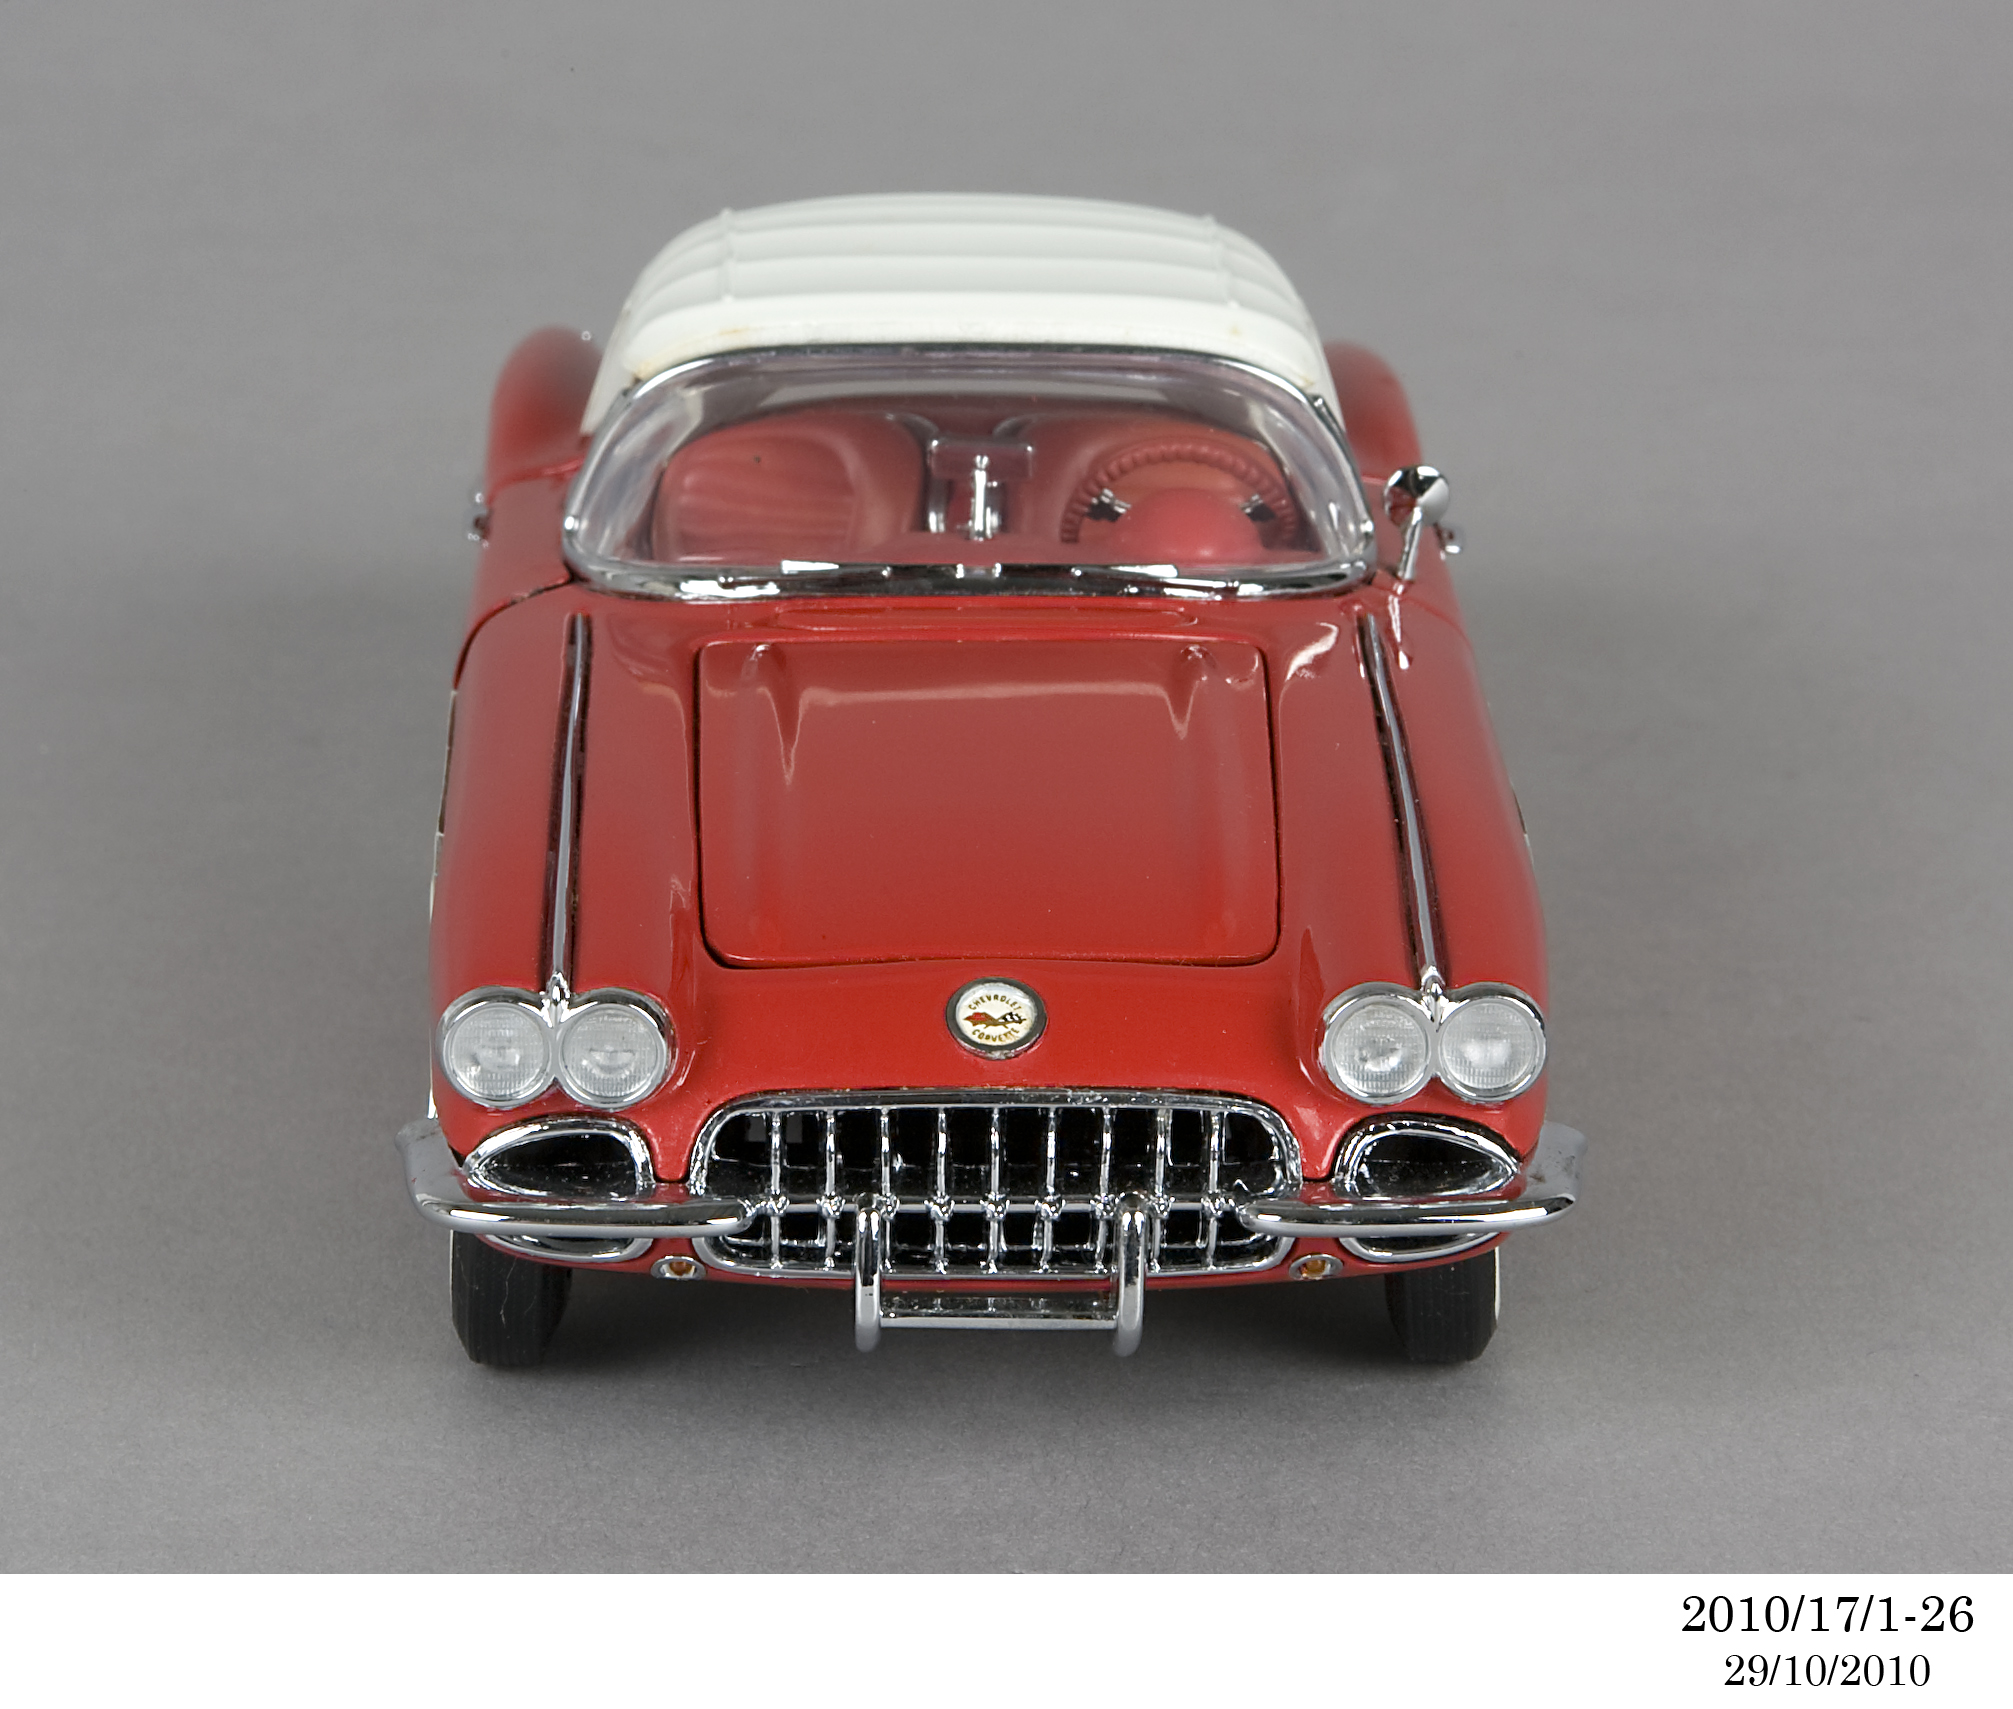 Model of 1959 Corvette convertible